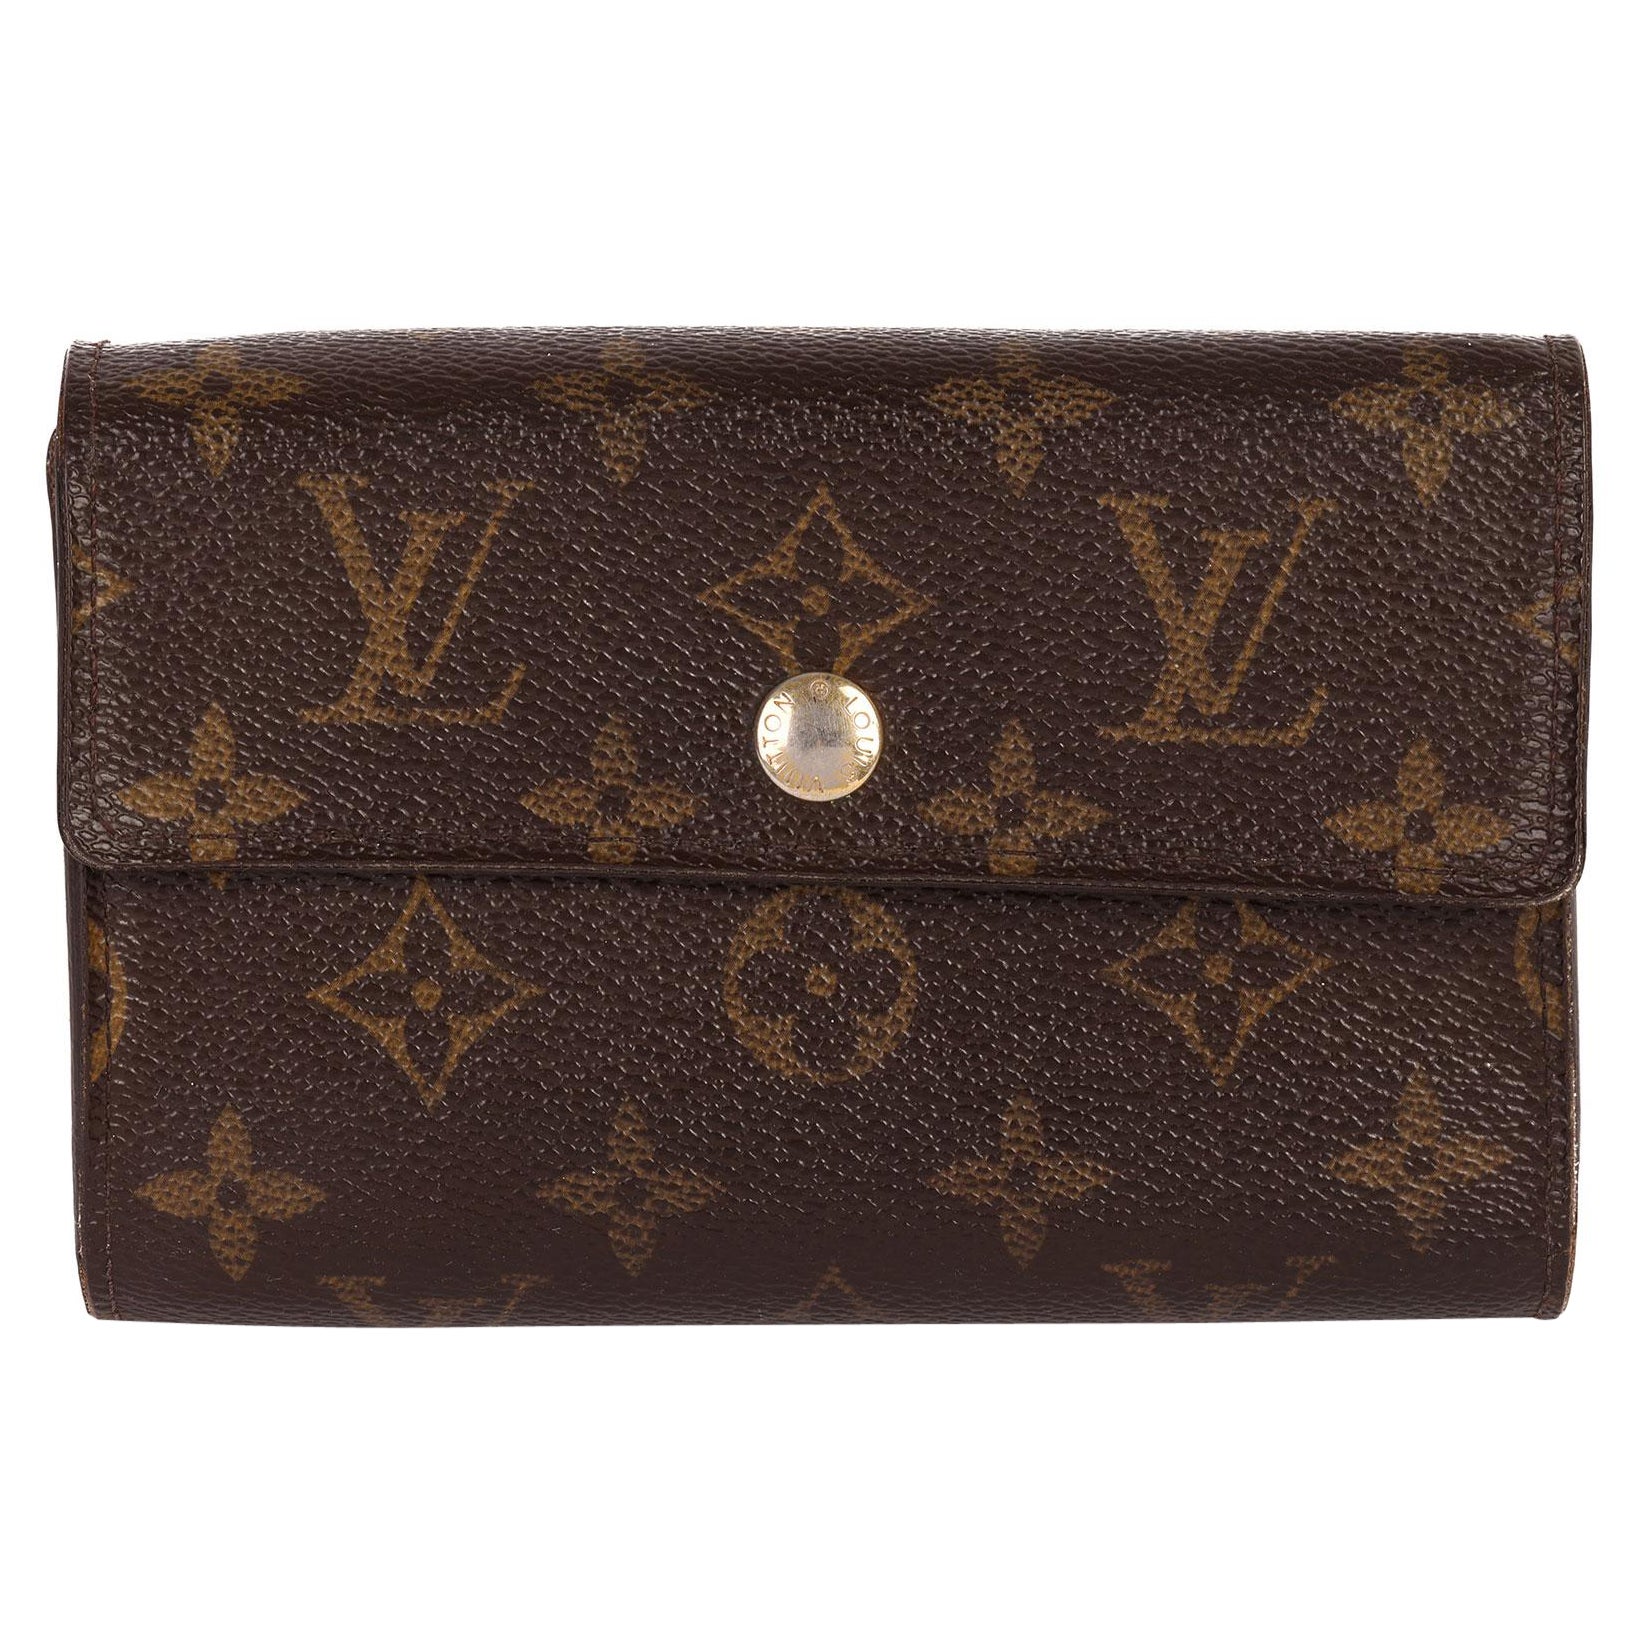 Louis Vuitton - Authenticated Koala Wallet - Leather Multicolour for Women, Good Condition